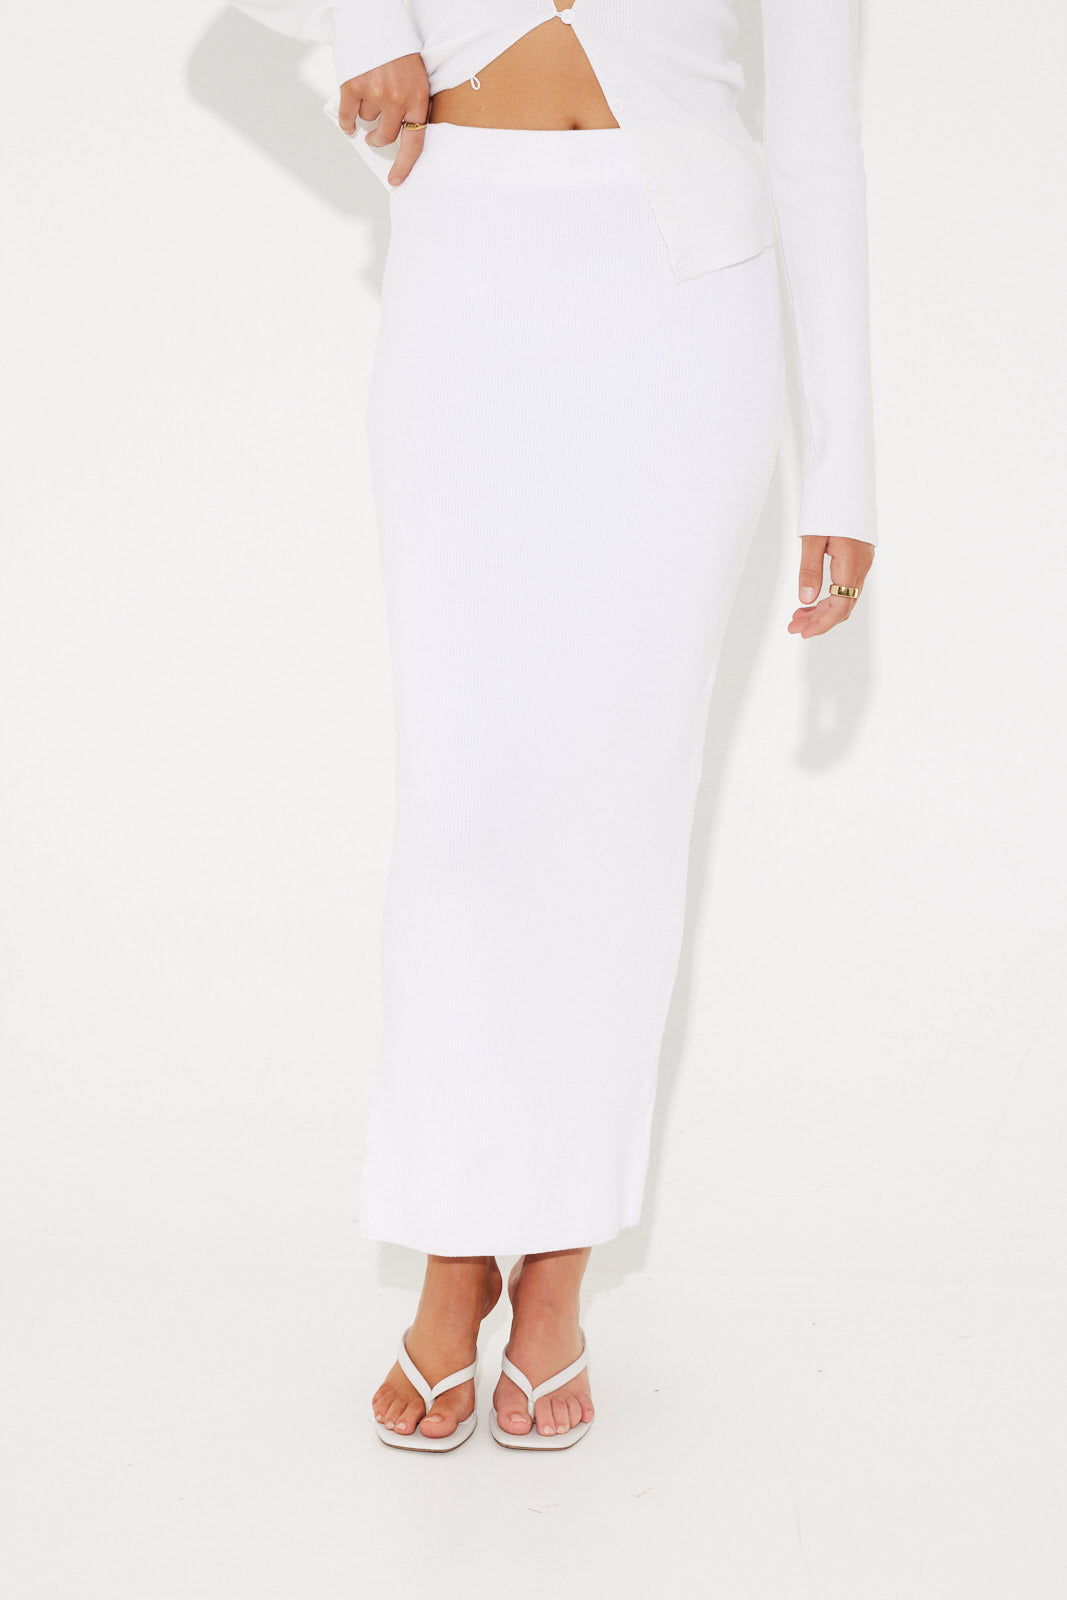 Fawn Skirt White - FINAL SALE